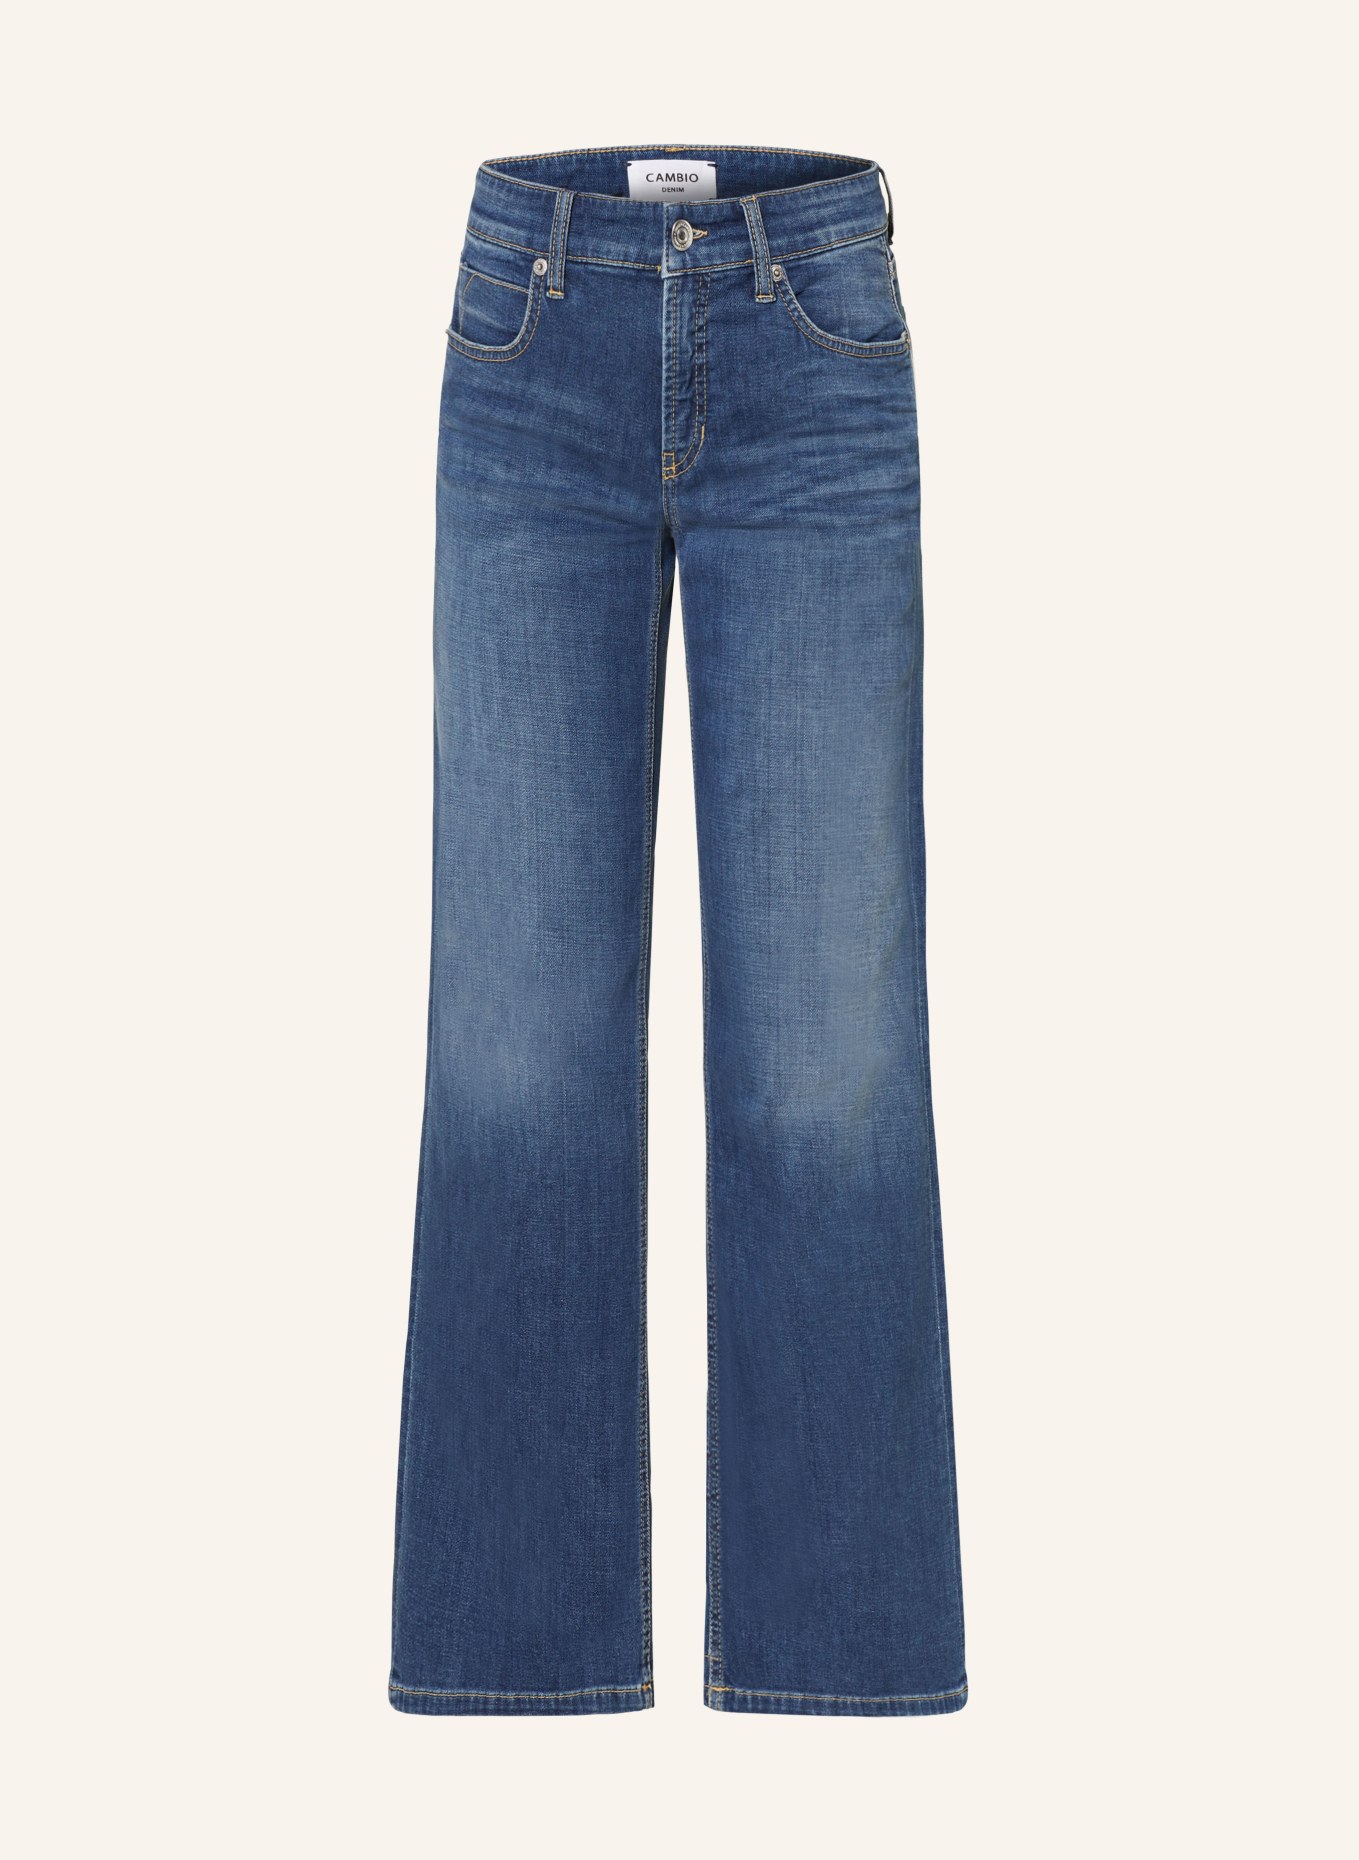 CAMBIO Flared Jeans TESS, Farbe: 5035 summer dark used (Bild 1)